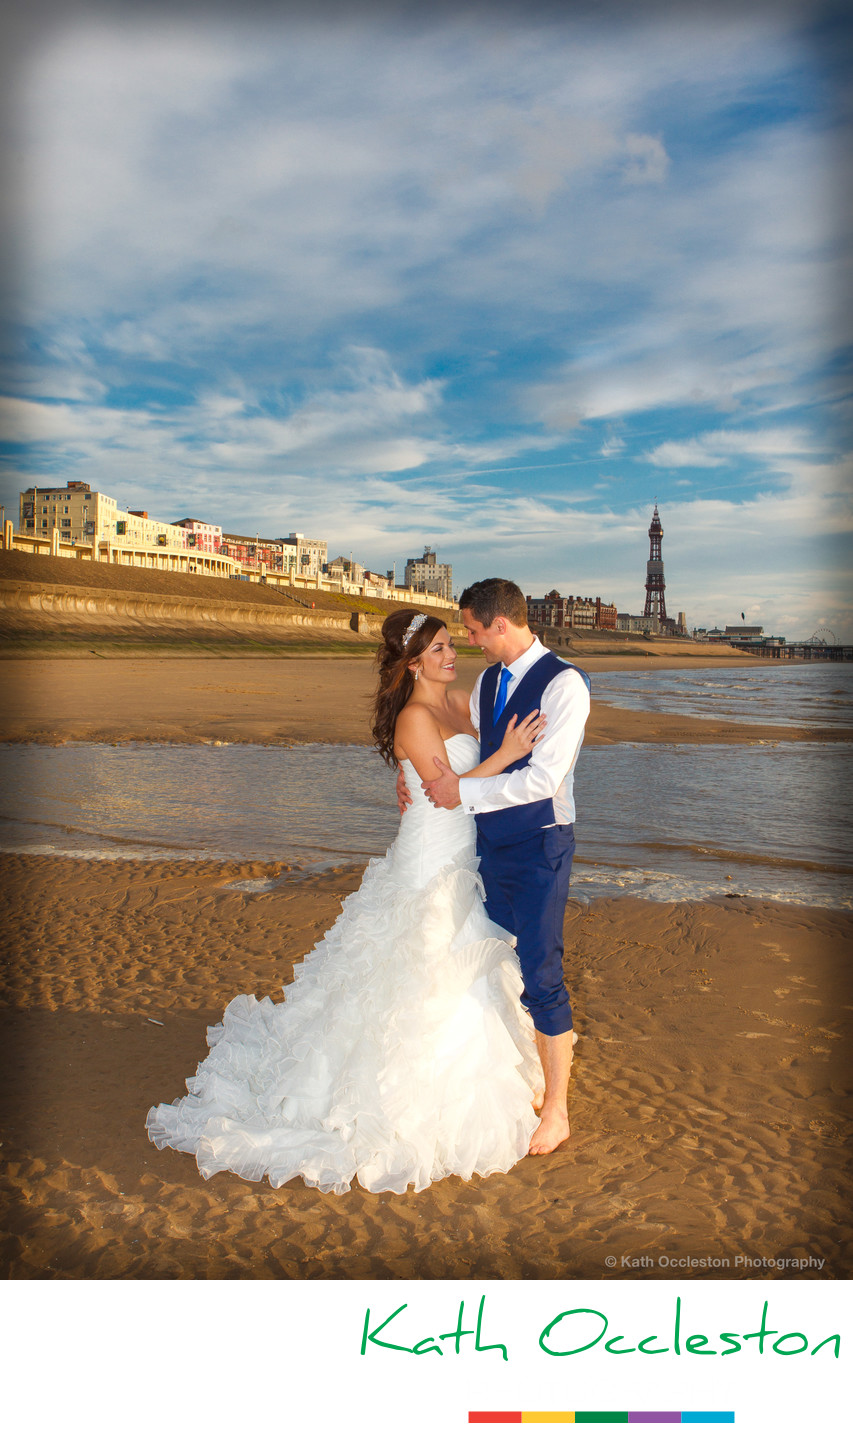 Wedding photography on Blackpool sands